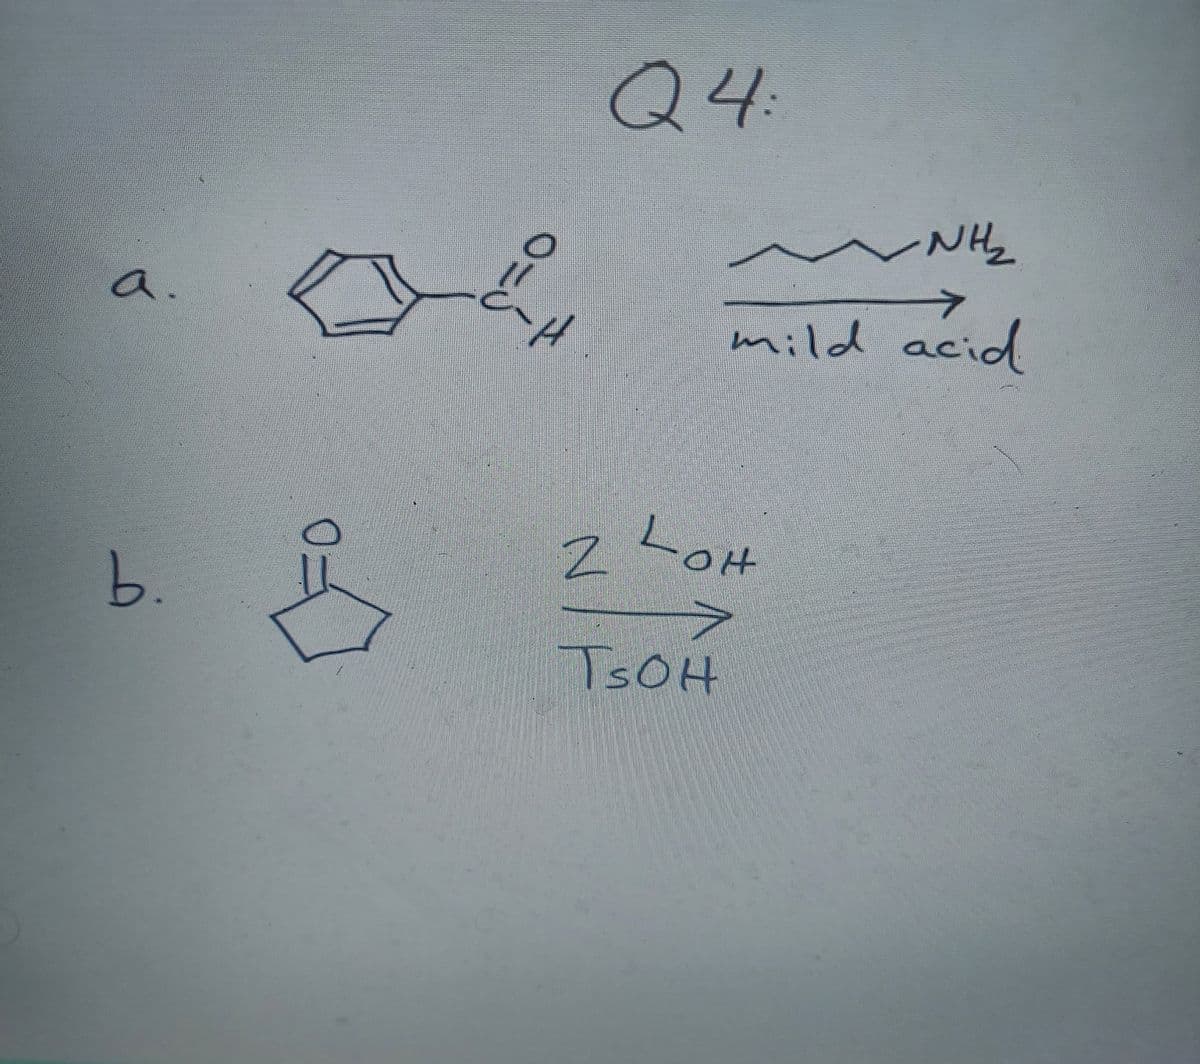 Q4
~ NH,
a.
->
mild acid
Lot
O五〇
b.
TSOH
sOH
